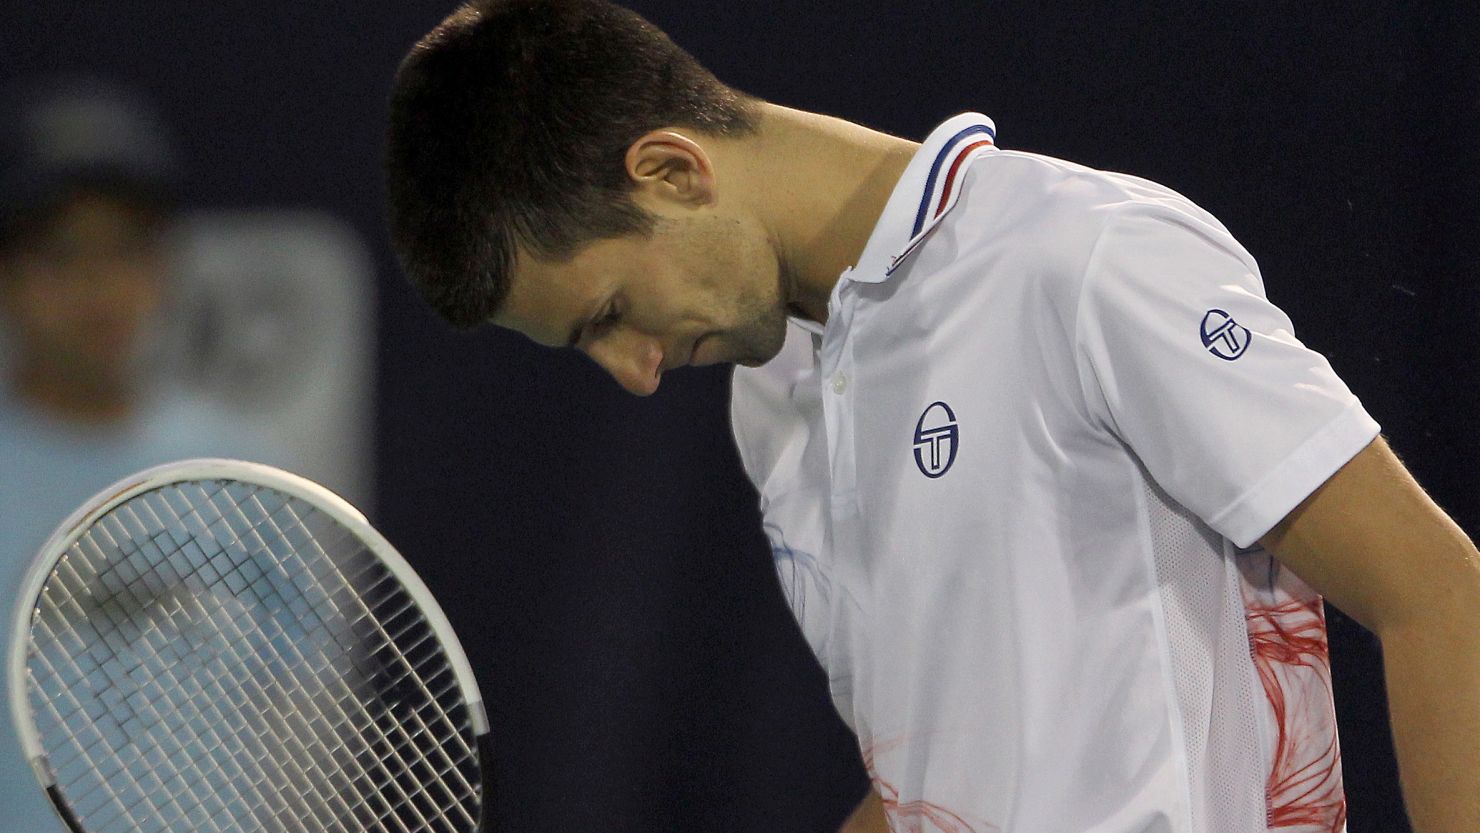 Serbia's world No. 1 Novak Djokovic had won the ATP Tour's Dubai tournament for the past three years.